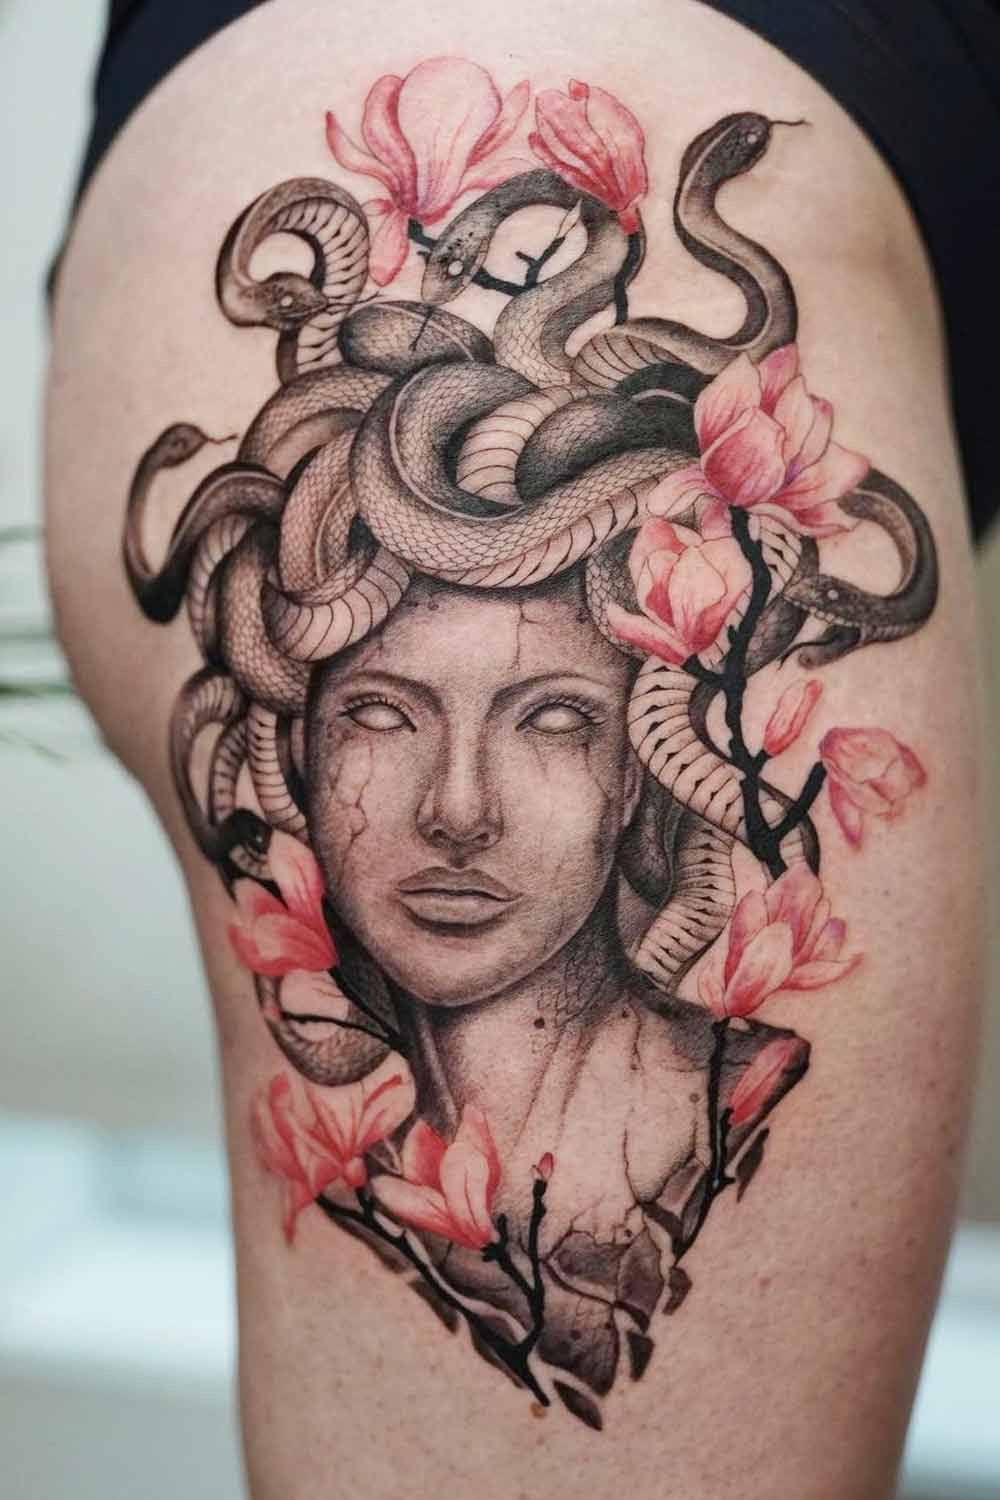 Medusa With Flowers Tattoo Design